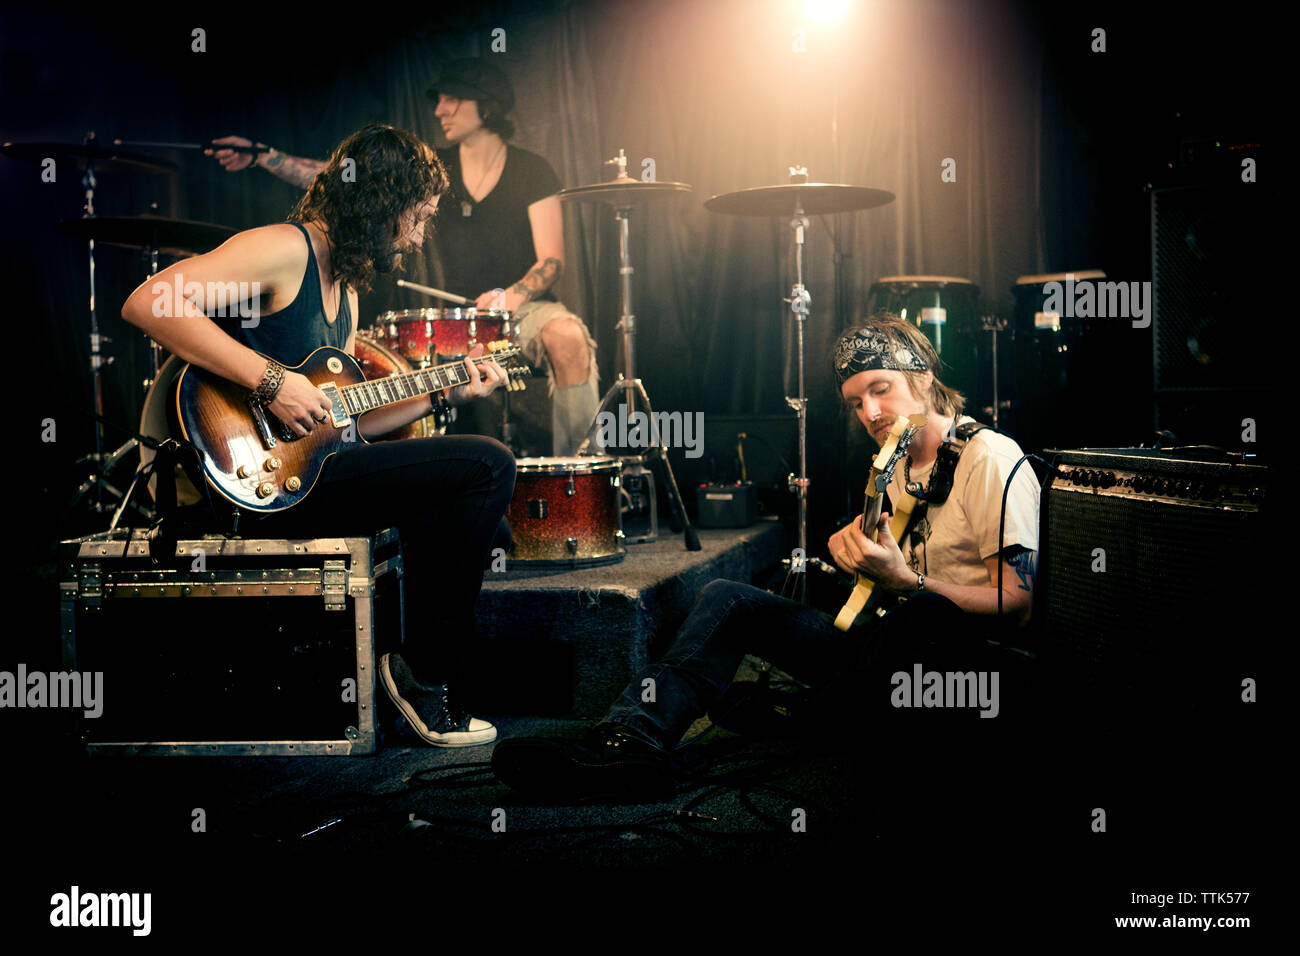 Musical band practicing in illuminated studio Stock Photo